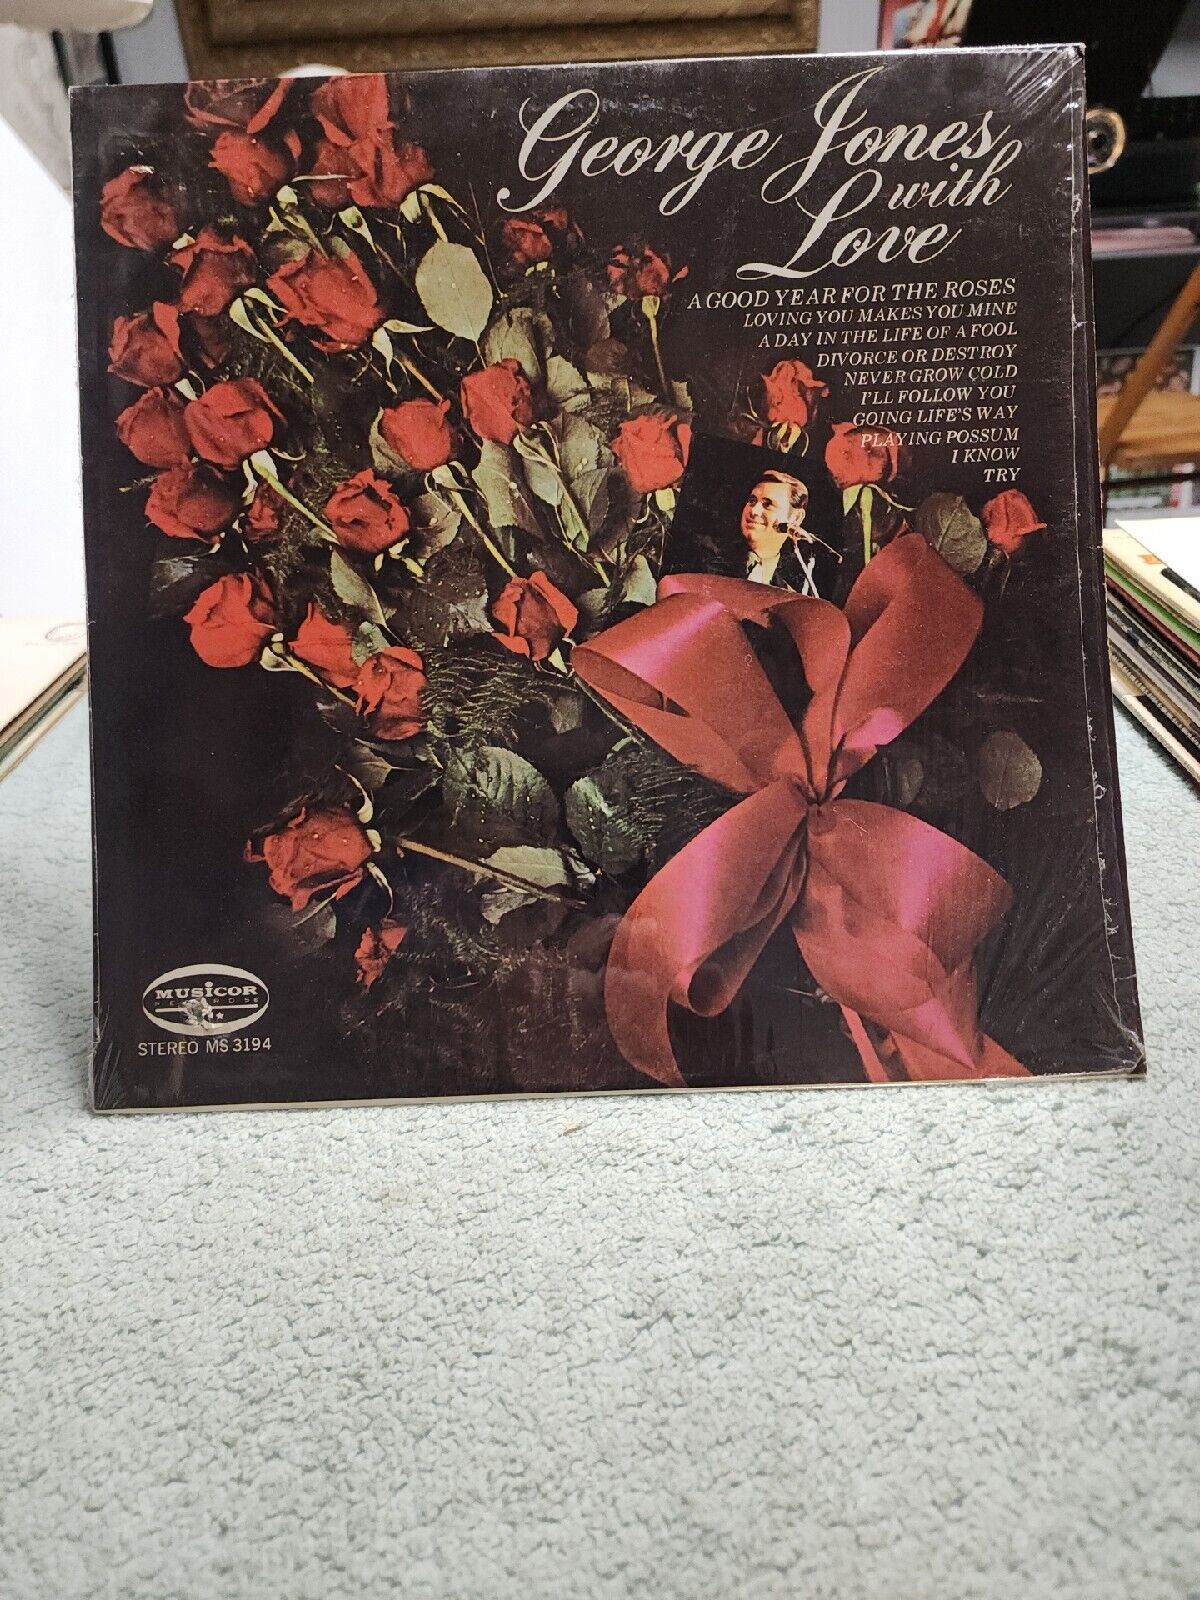  GEORGE JONES WITH LOVE MUSICOR RECORDS VINYL LP MS-3194 VG+ VINTAGE 